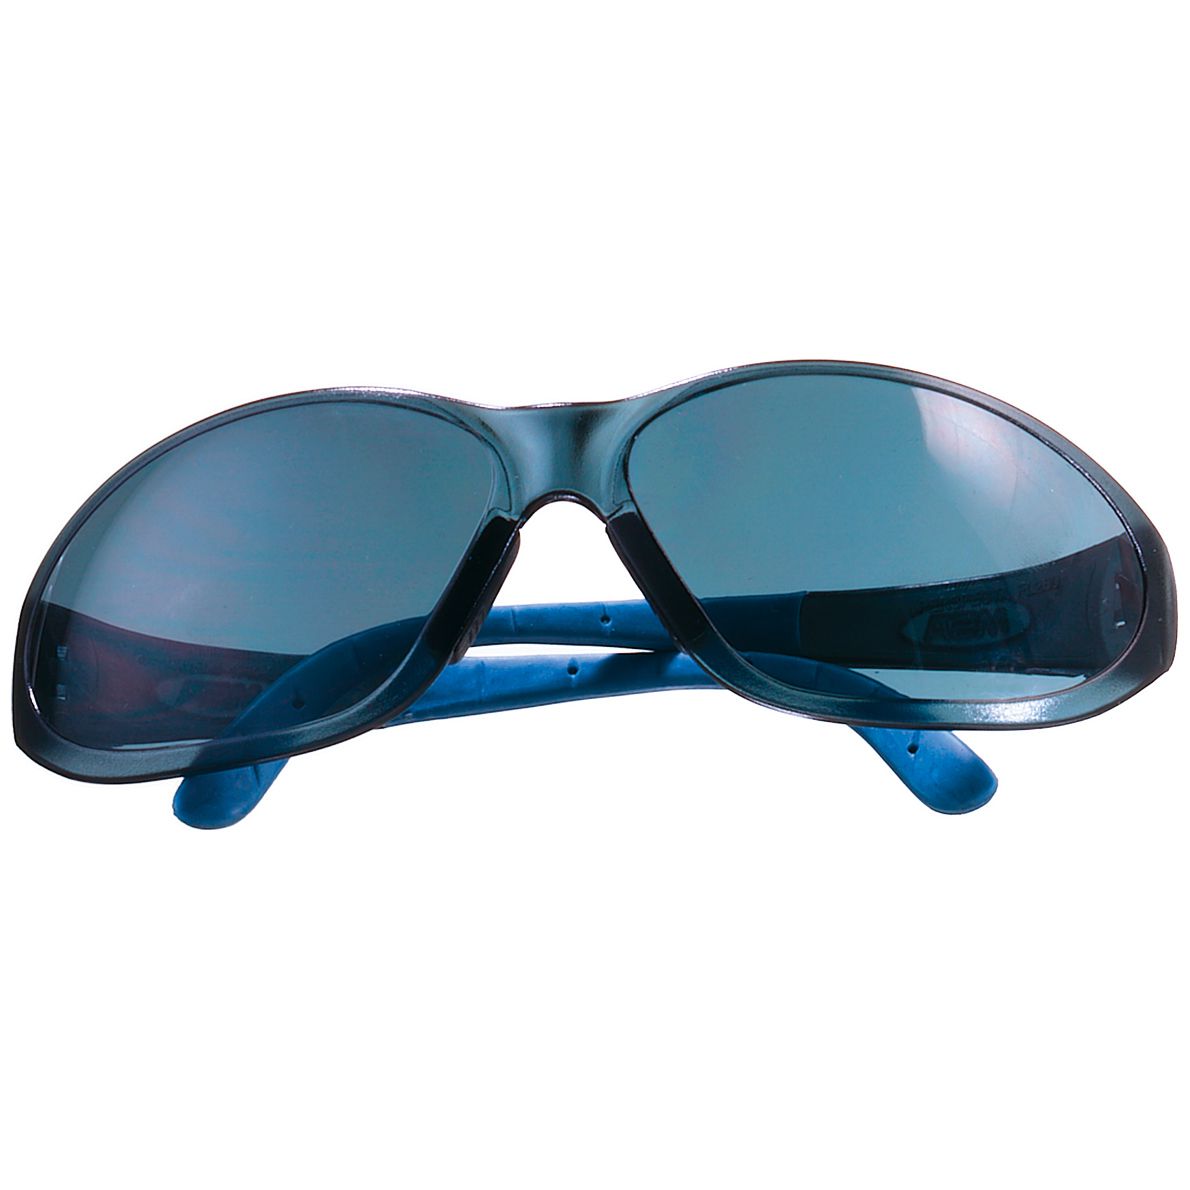 MSA Perspecta 9000 Schutzbrille - kratz- & beschlagfest dank Sightgard-Beschichtung - EN 166/172 - Schwarz/Getönt